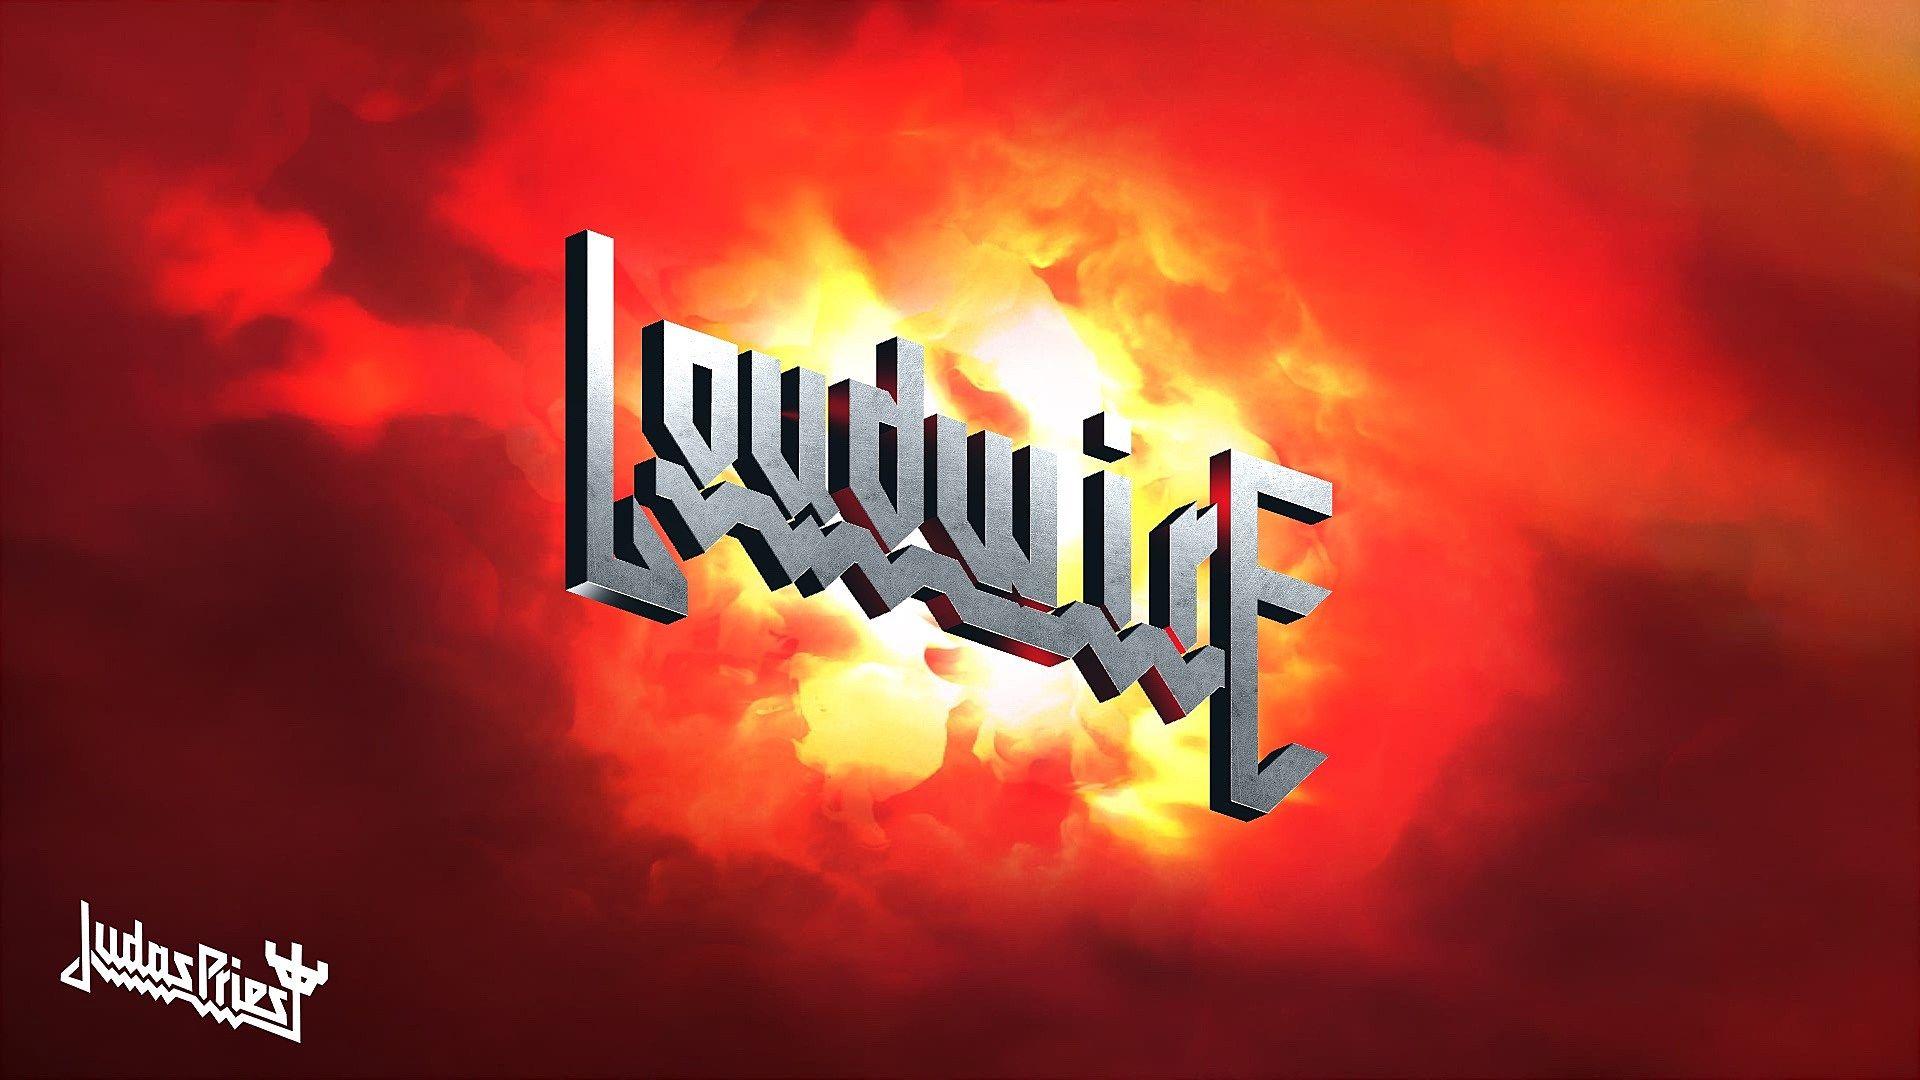 Judas Priest Original Logo - See How Your Name Looks in Judas Priest's Logo Font